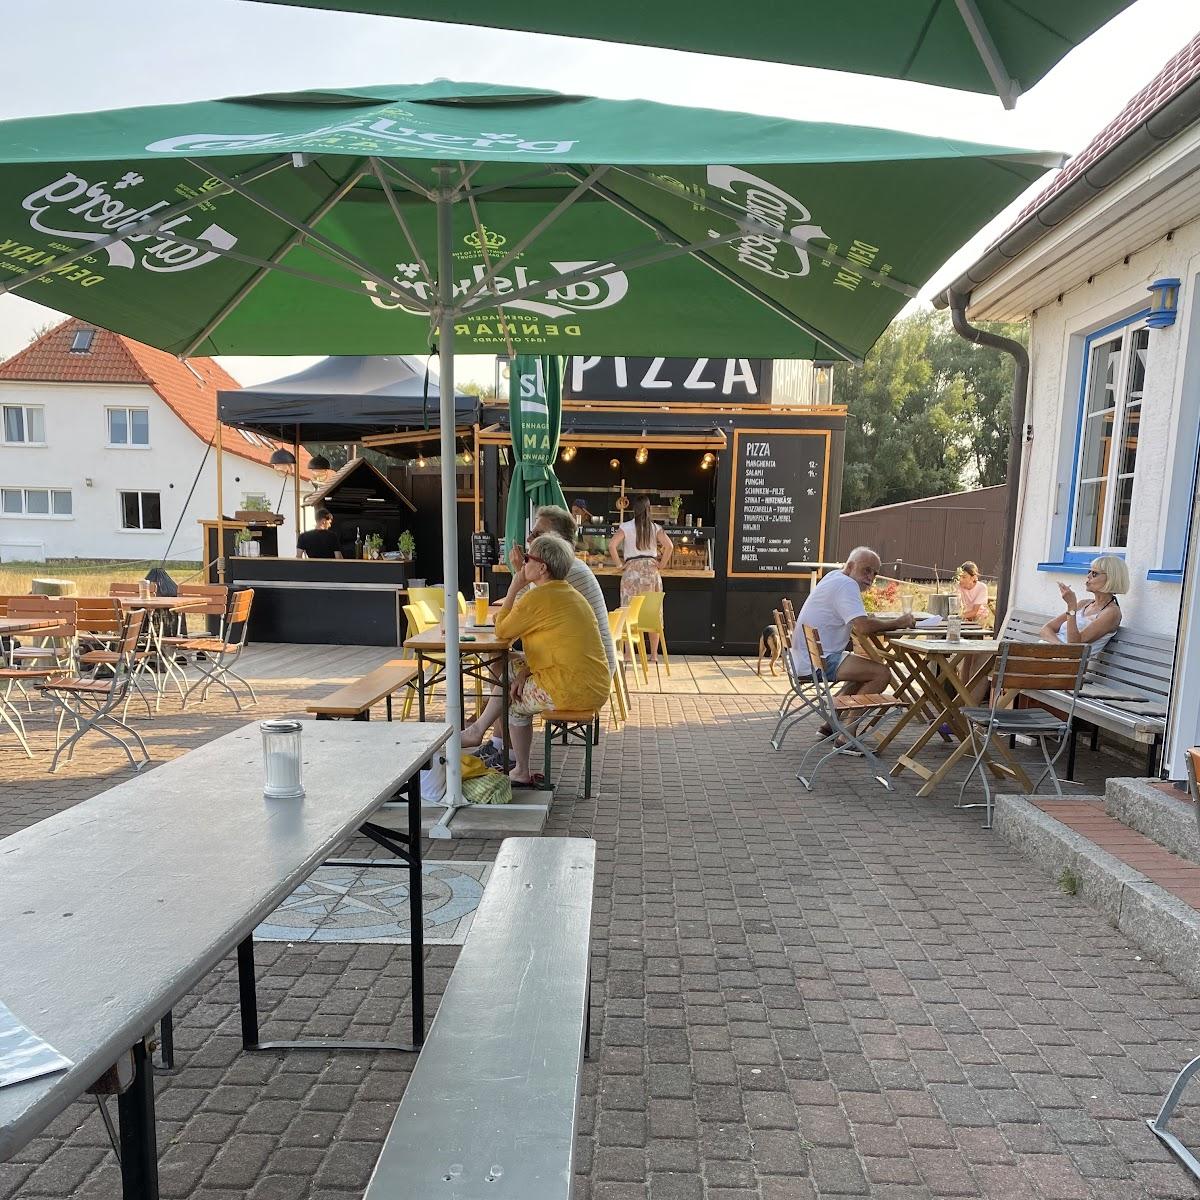 Restaurant "Pizza" in Insel Hiddensee